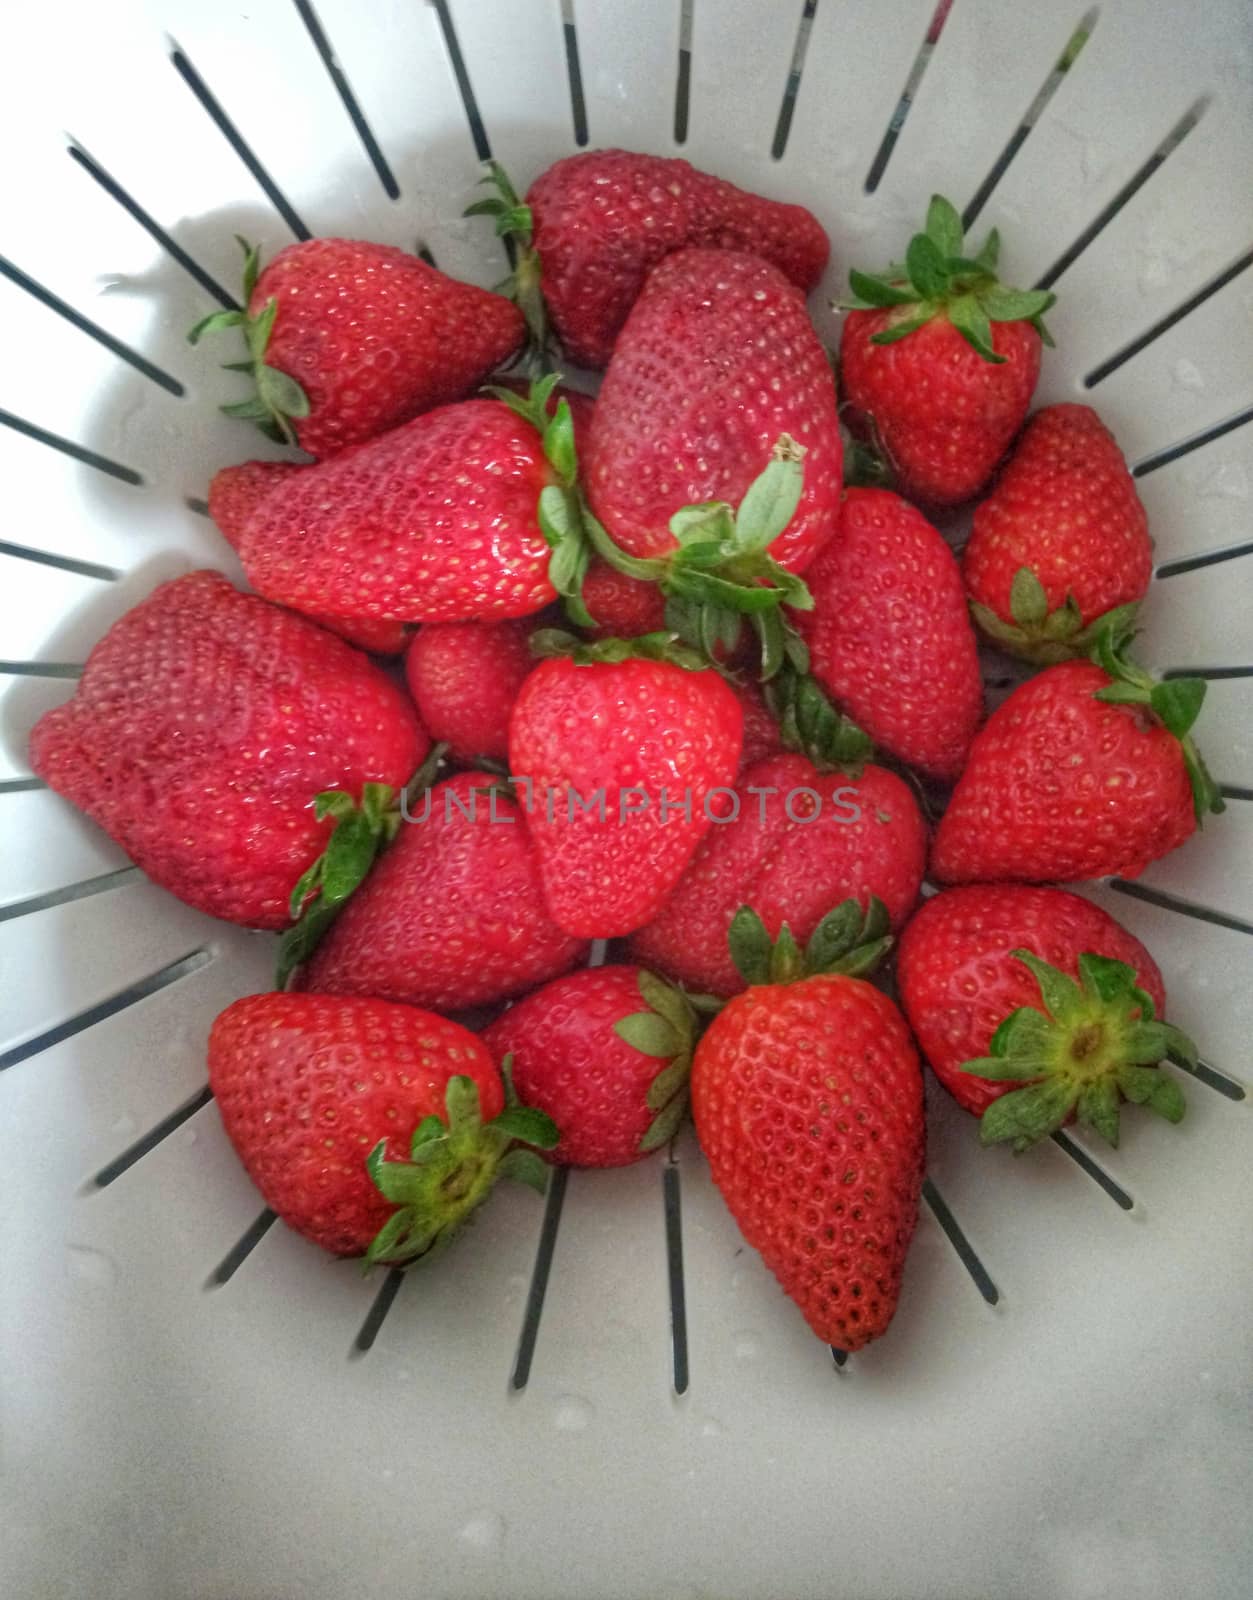 Washing Strawberries by federica_favara